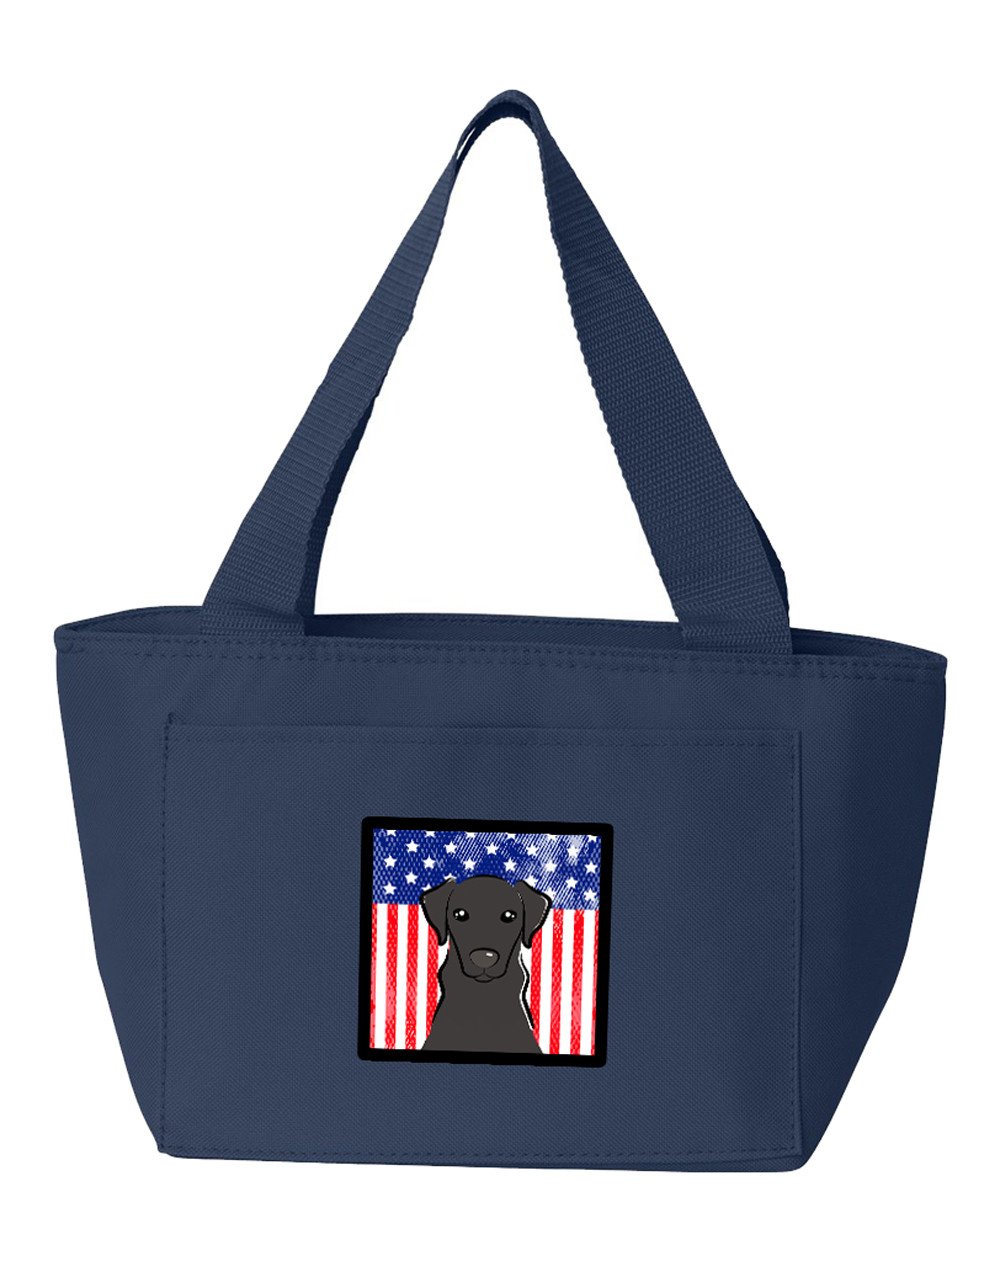 American Flag and Black Labrador Lunch Bag BB2165NA-8808 by Caroline's Treasures